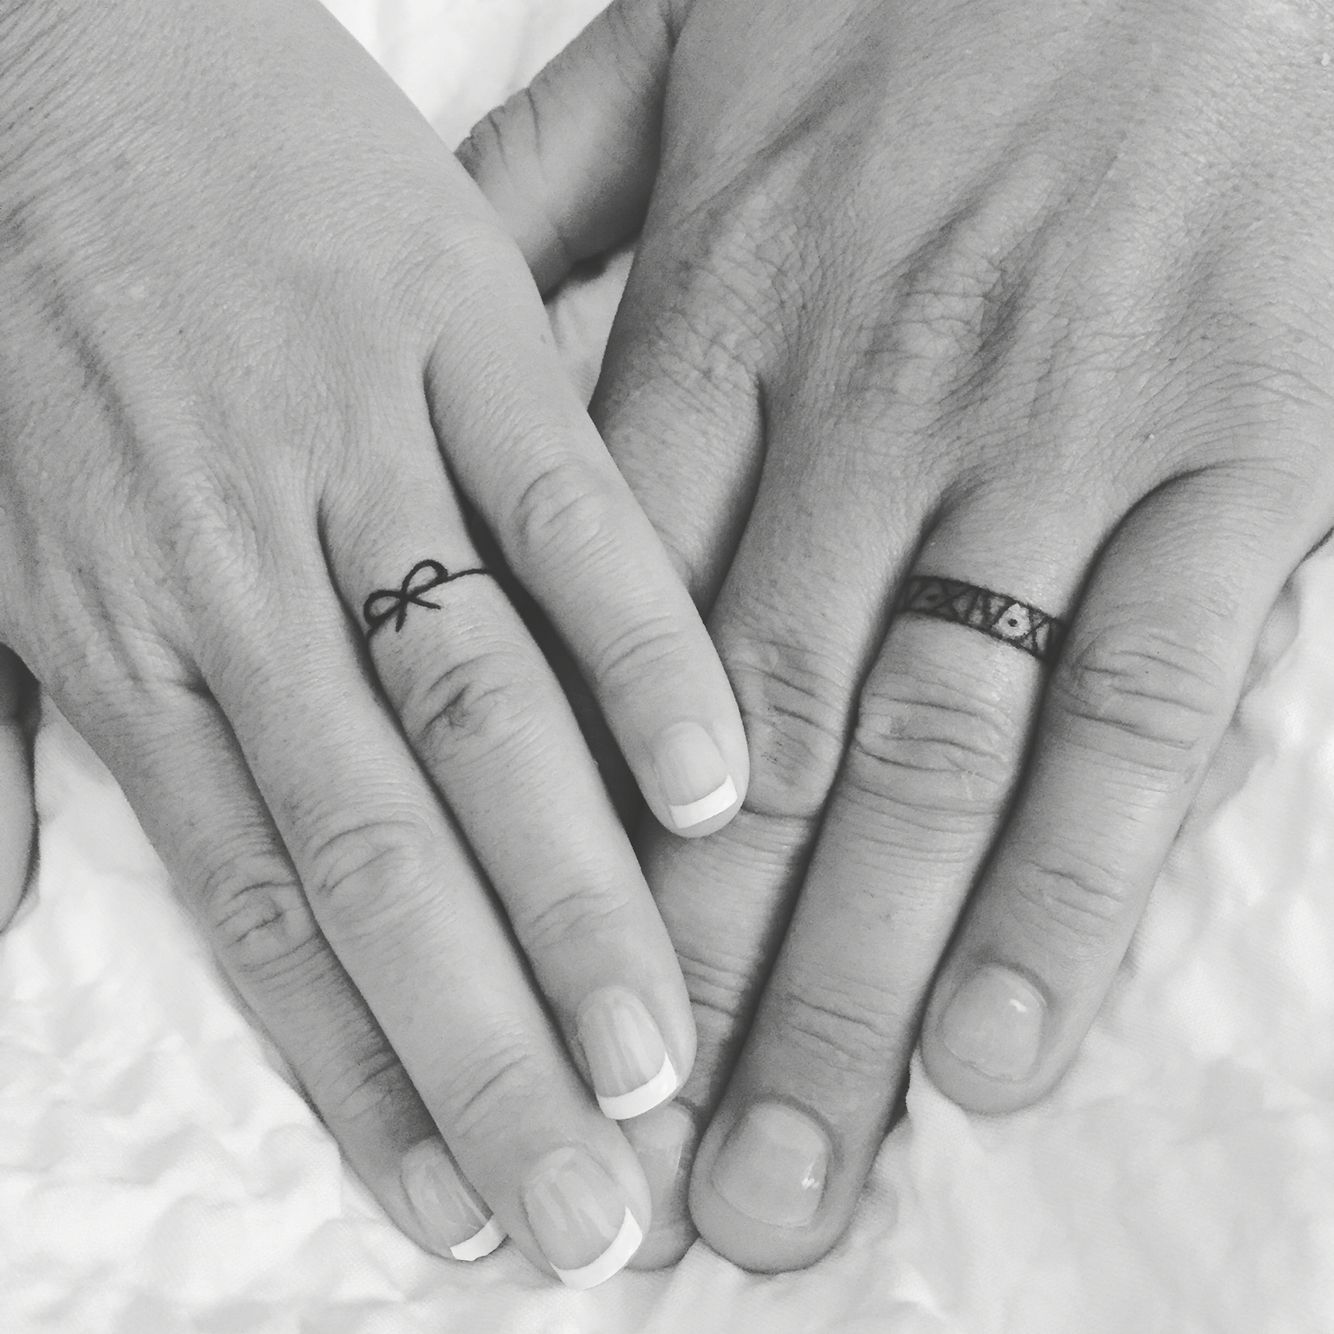 Wedding Ring Tattoos - Who Should use Inked Wedding Rings